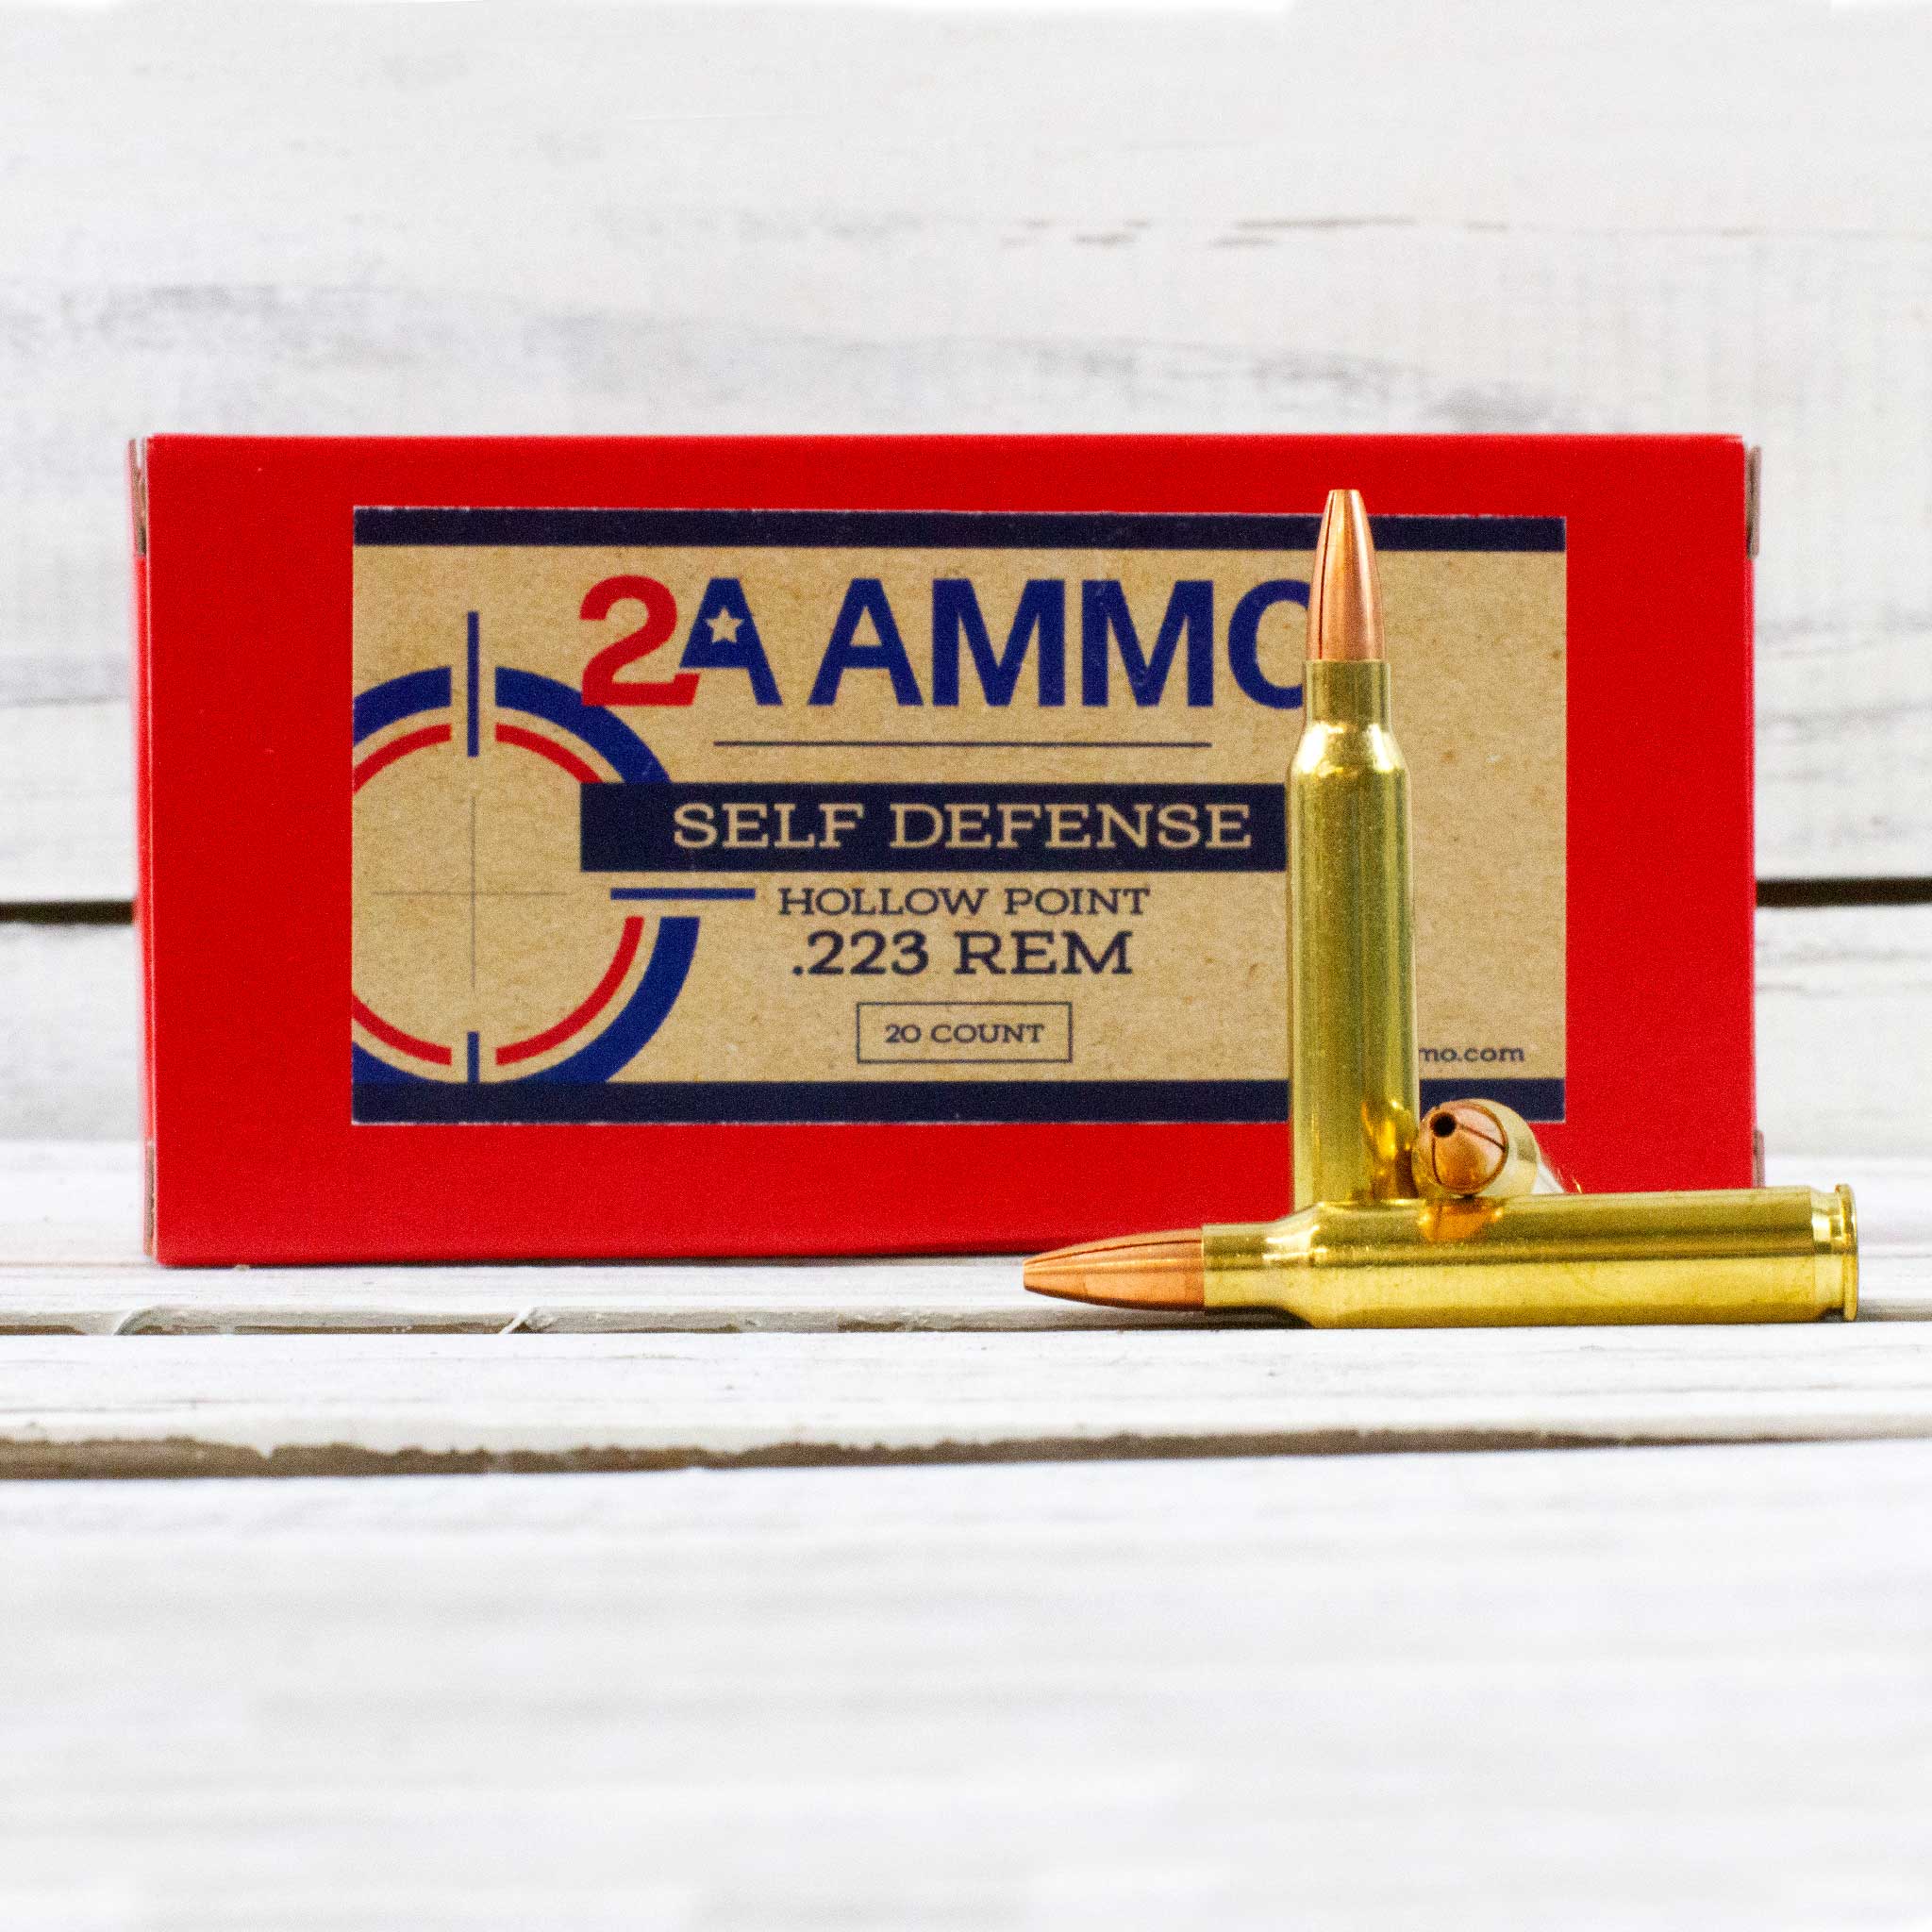 223 REM Hollow Point Self Defense Ammo